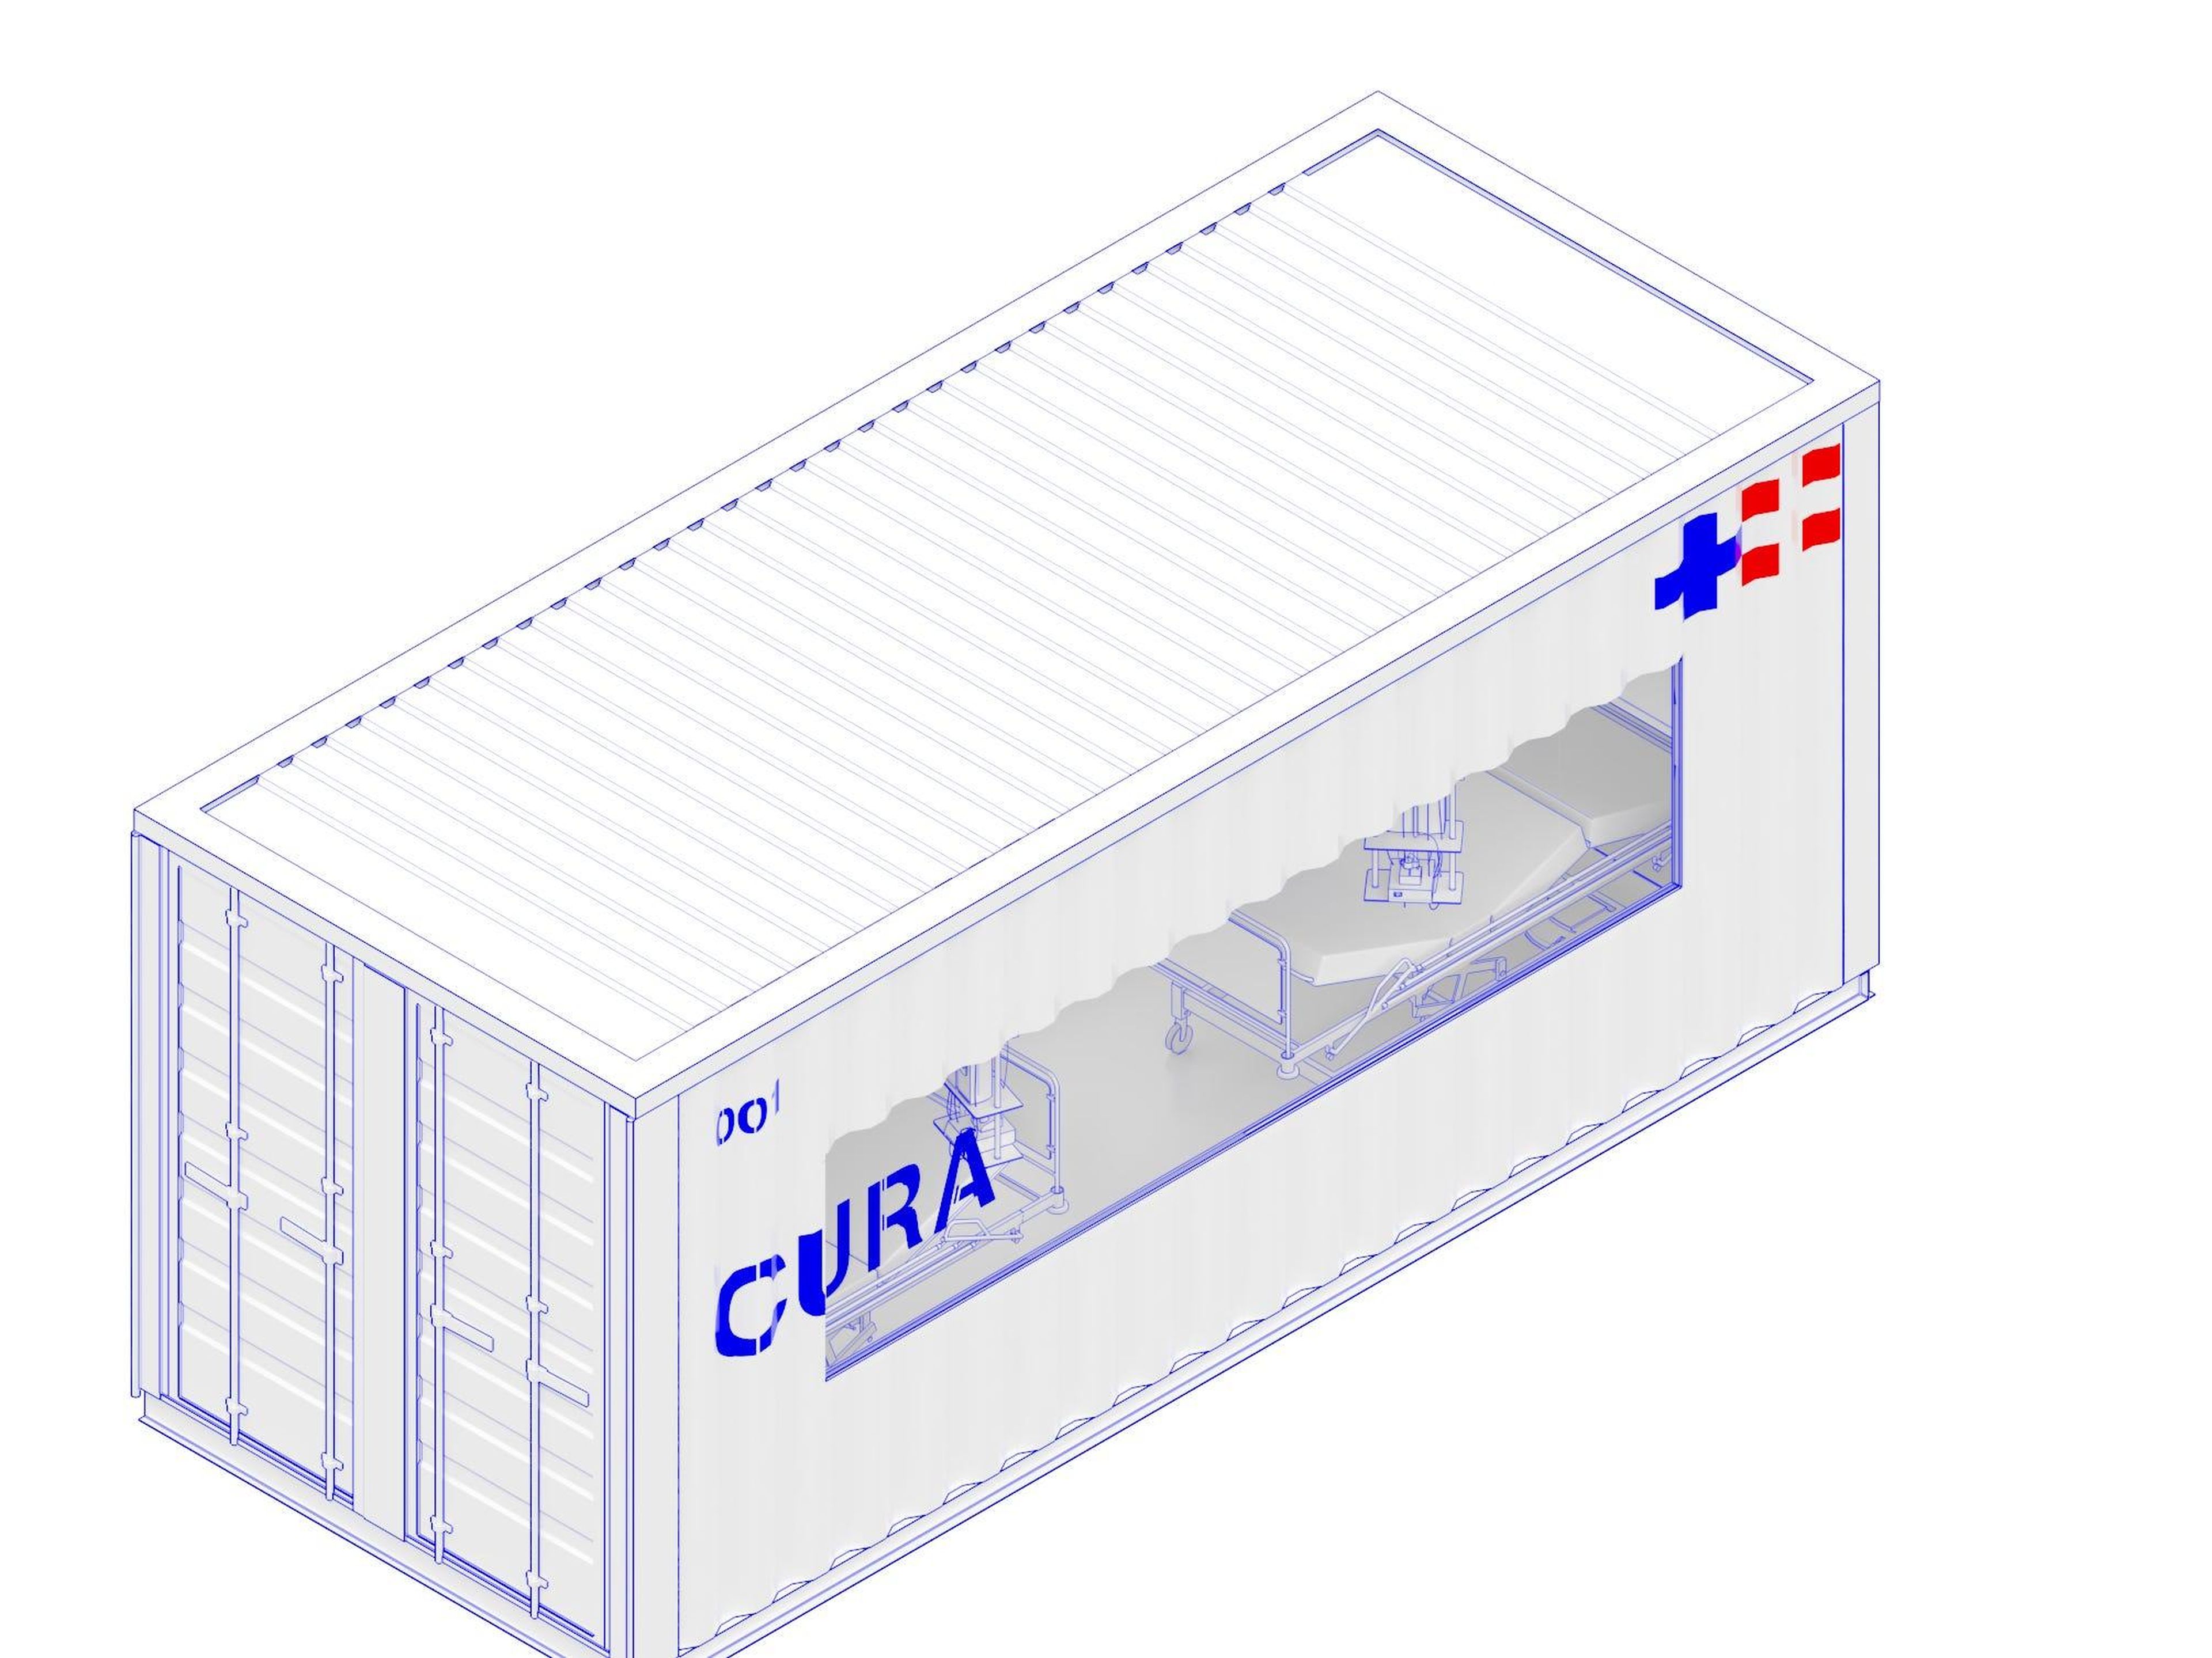 Diseño de un CURA pod.